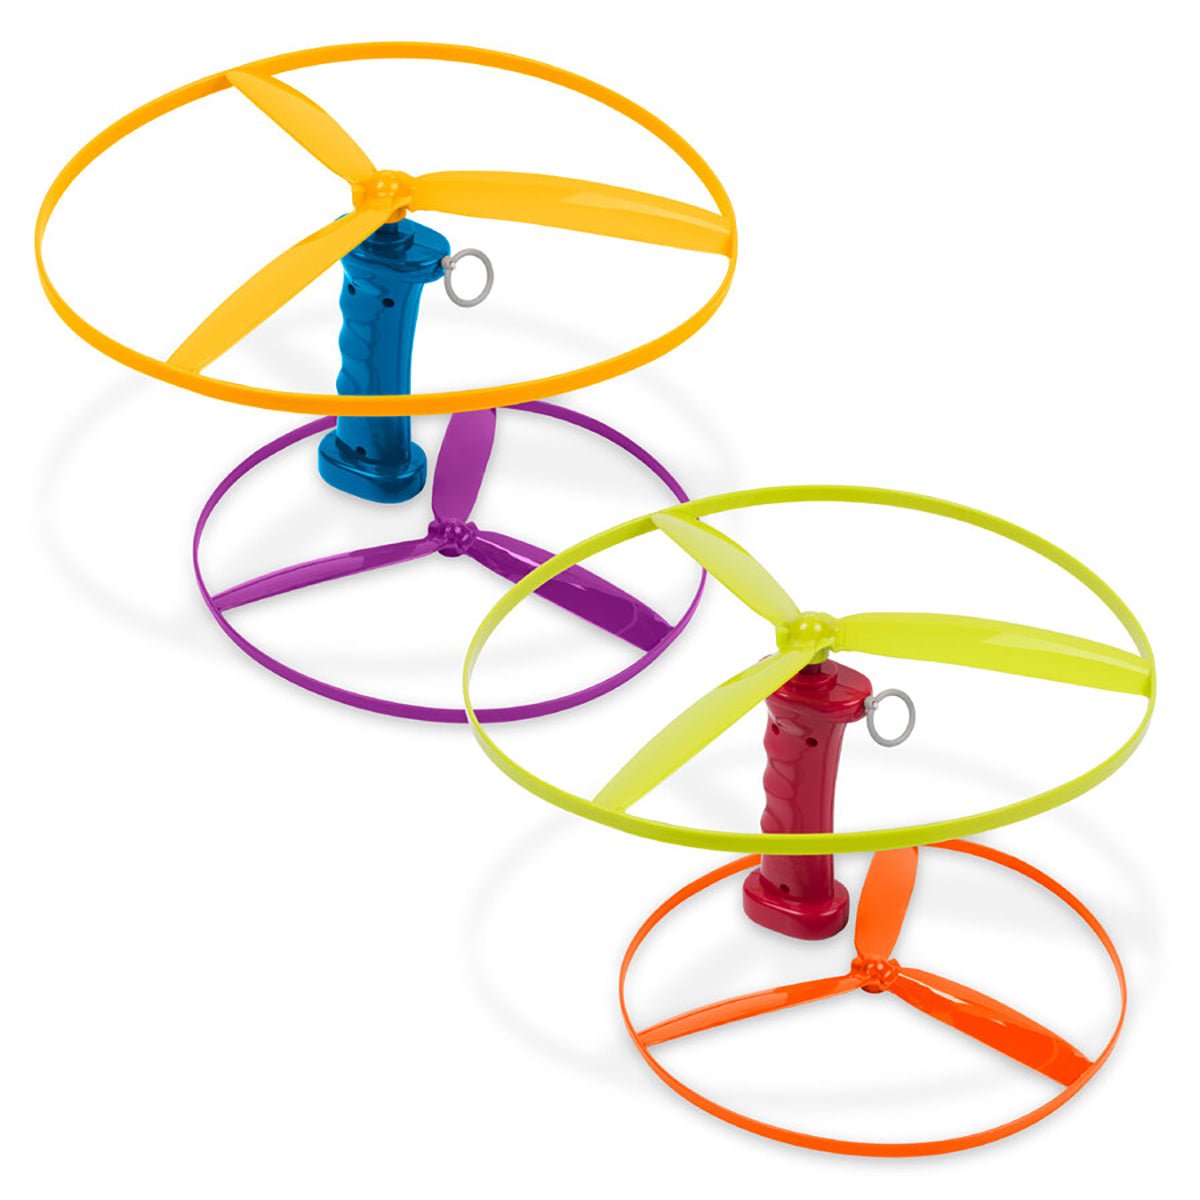 Skycopter toy | Battat toys